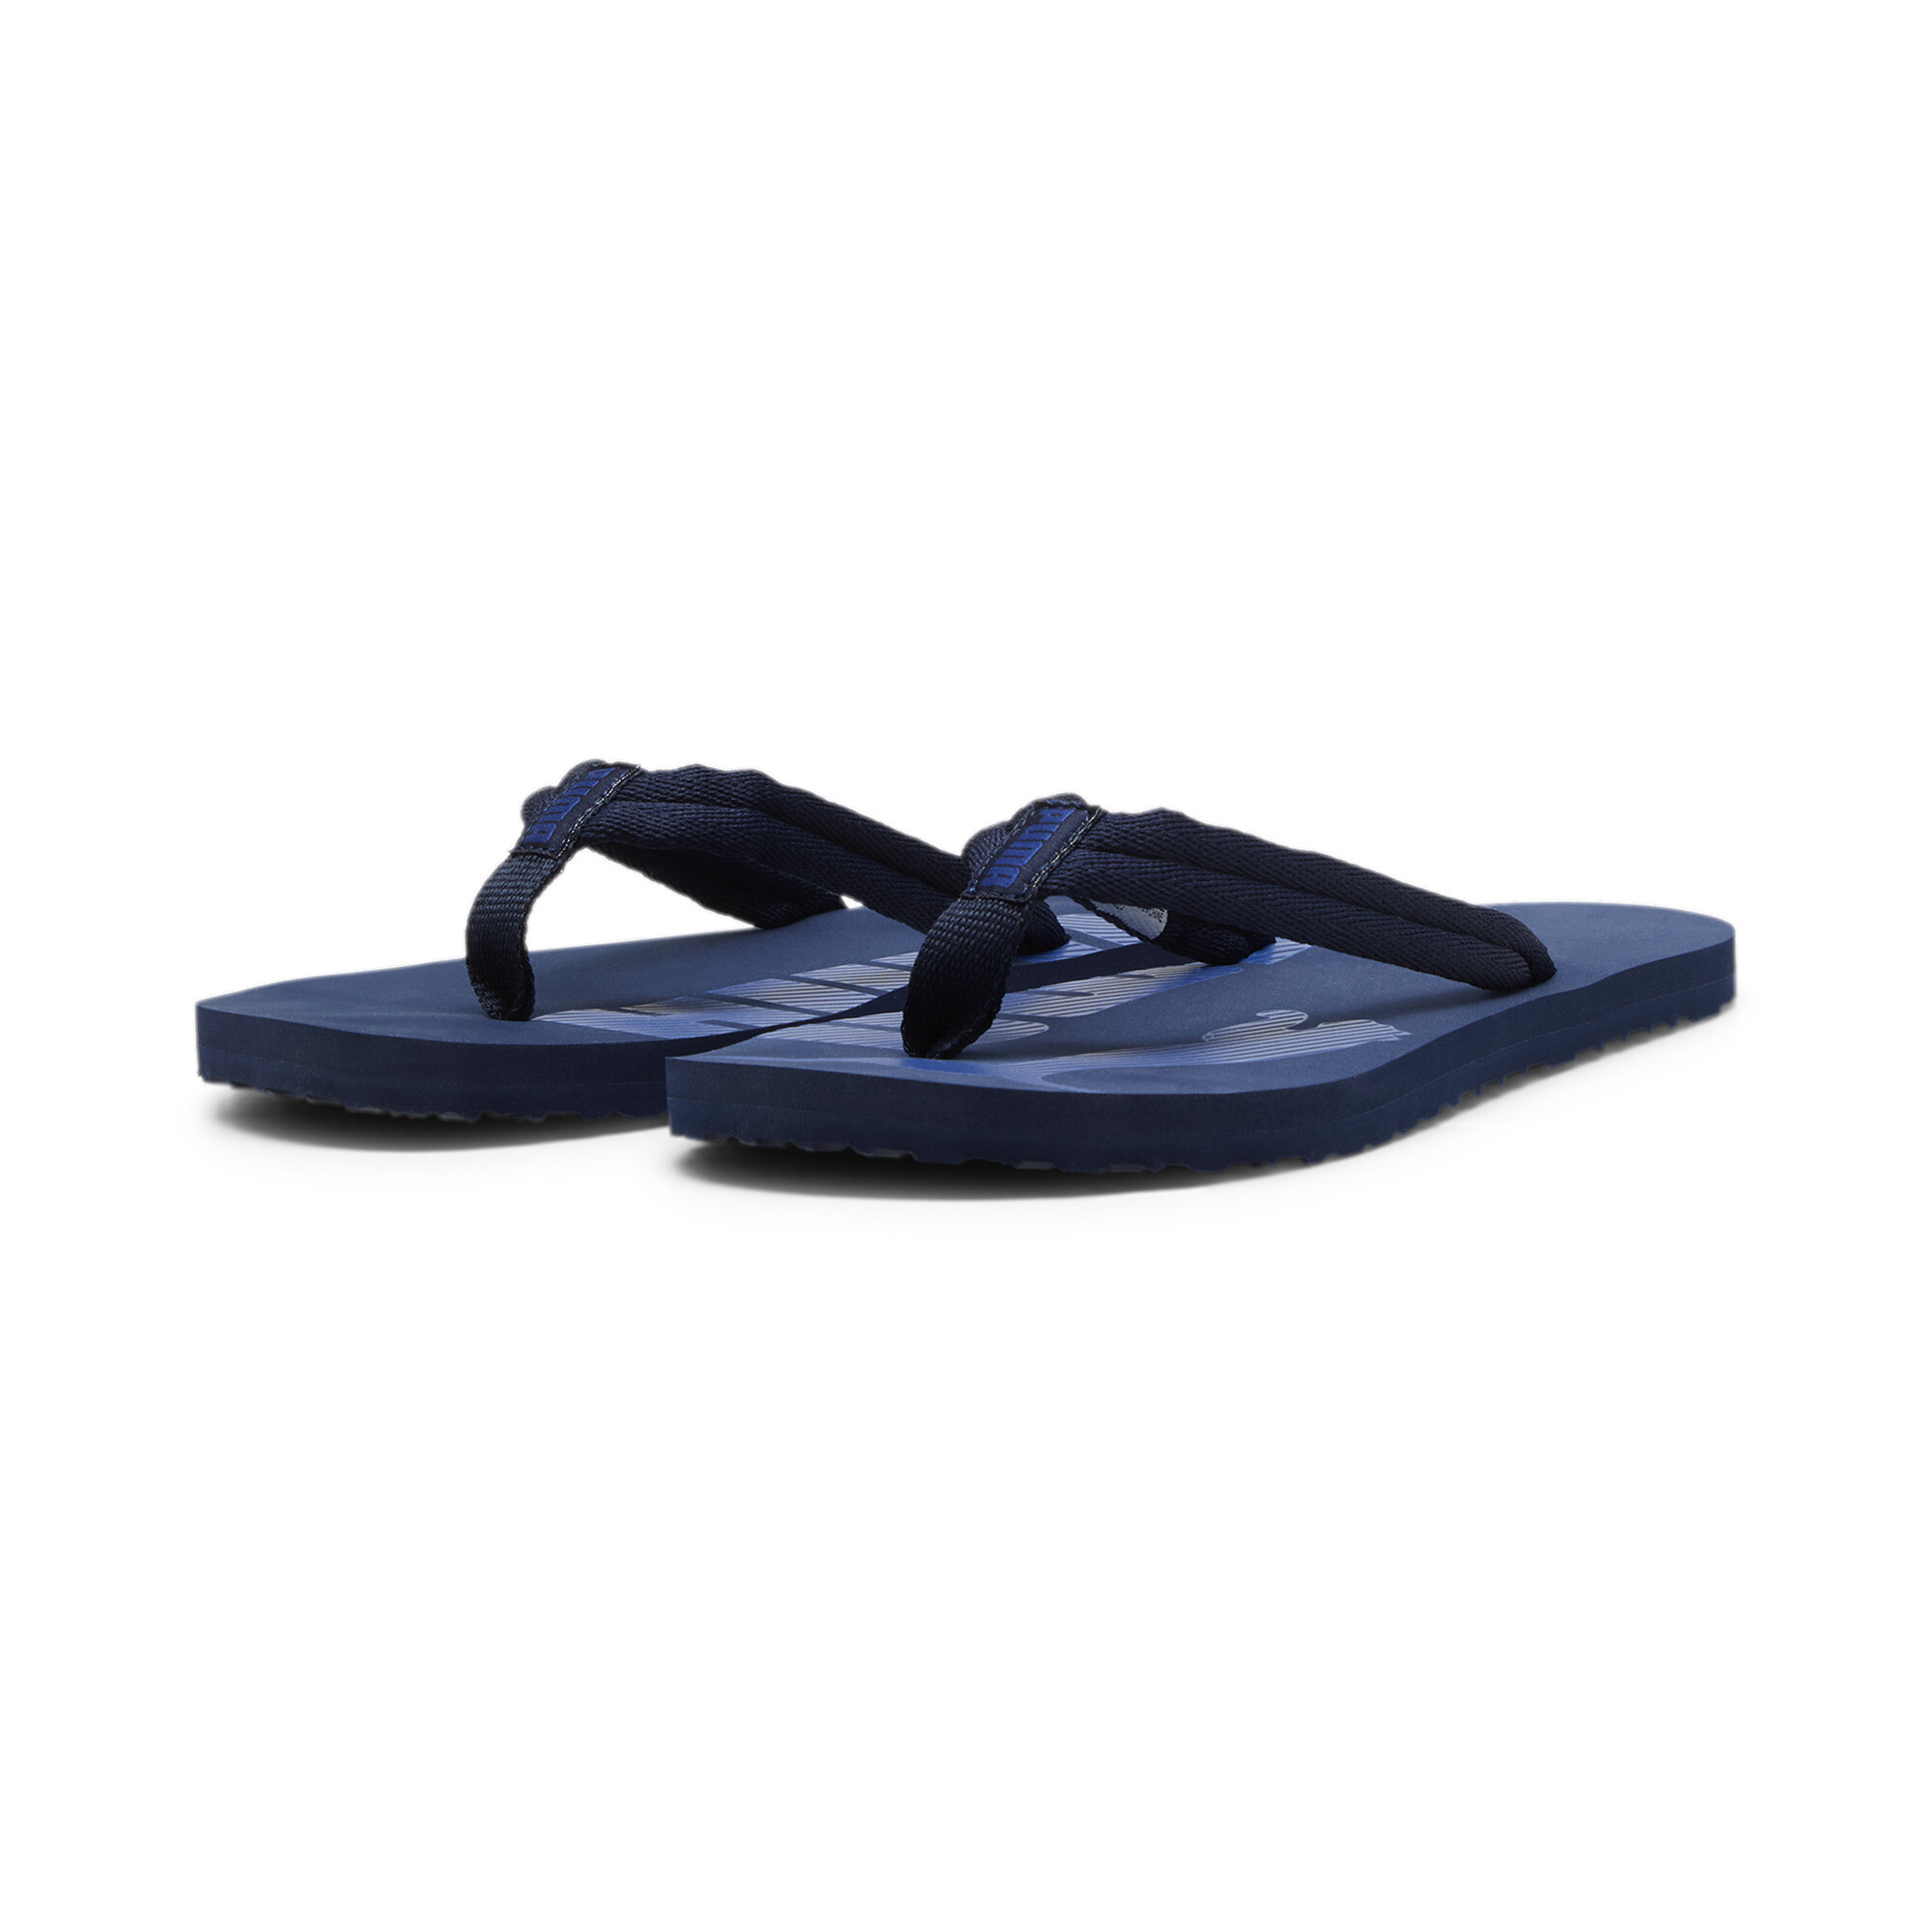 Men's PUMA Epic Flip V2 Sandals In Blue, Size EU 40.5